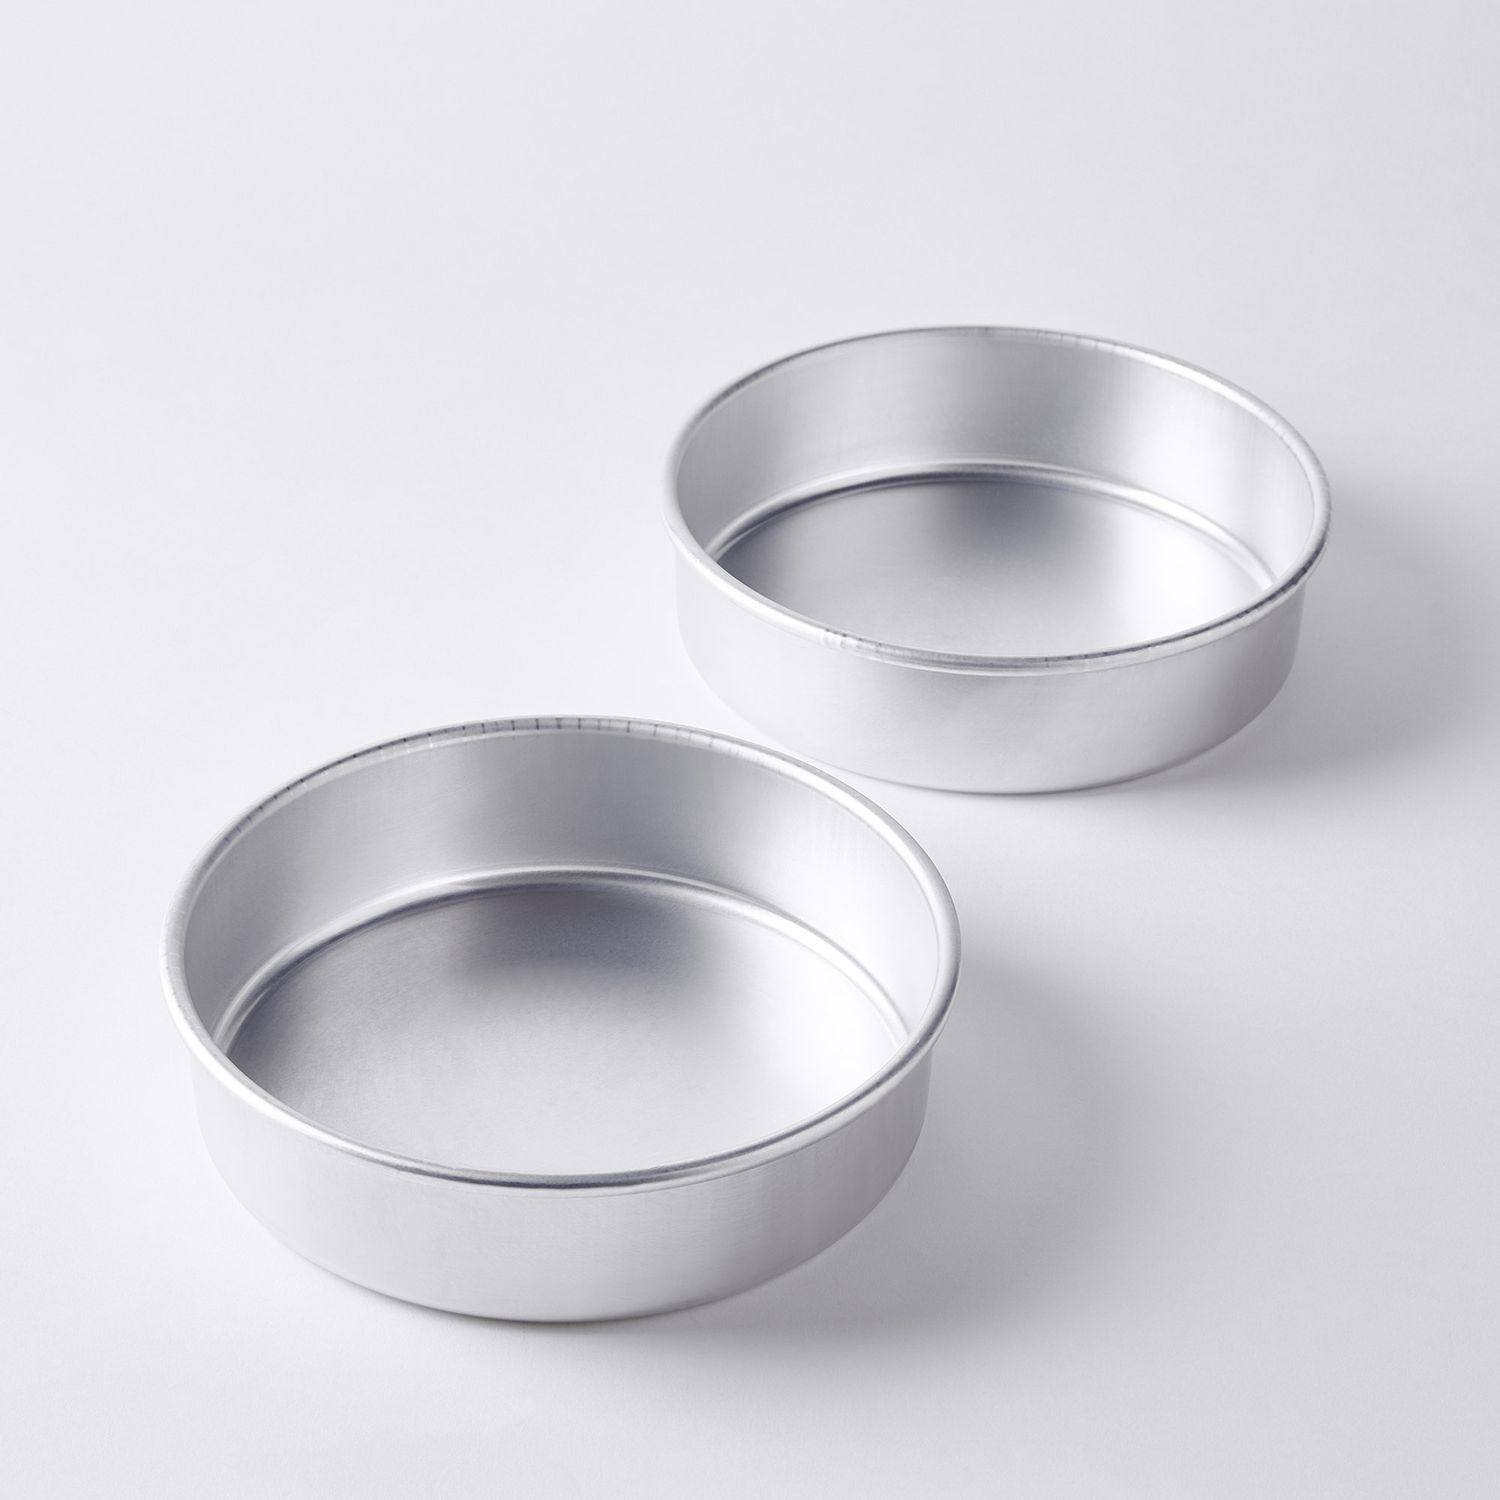 Nordic Ware Springform Pan, 7-Inch & 9-Inch, Carbon Steel on Food52